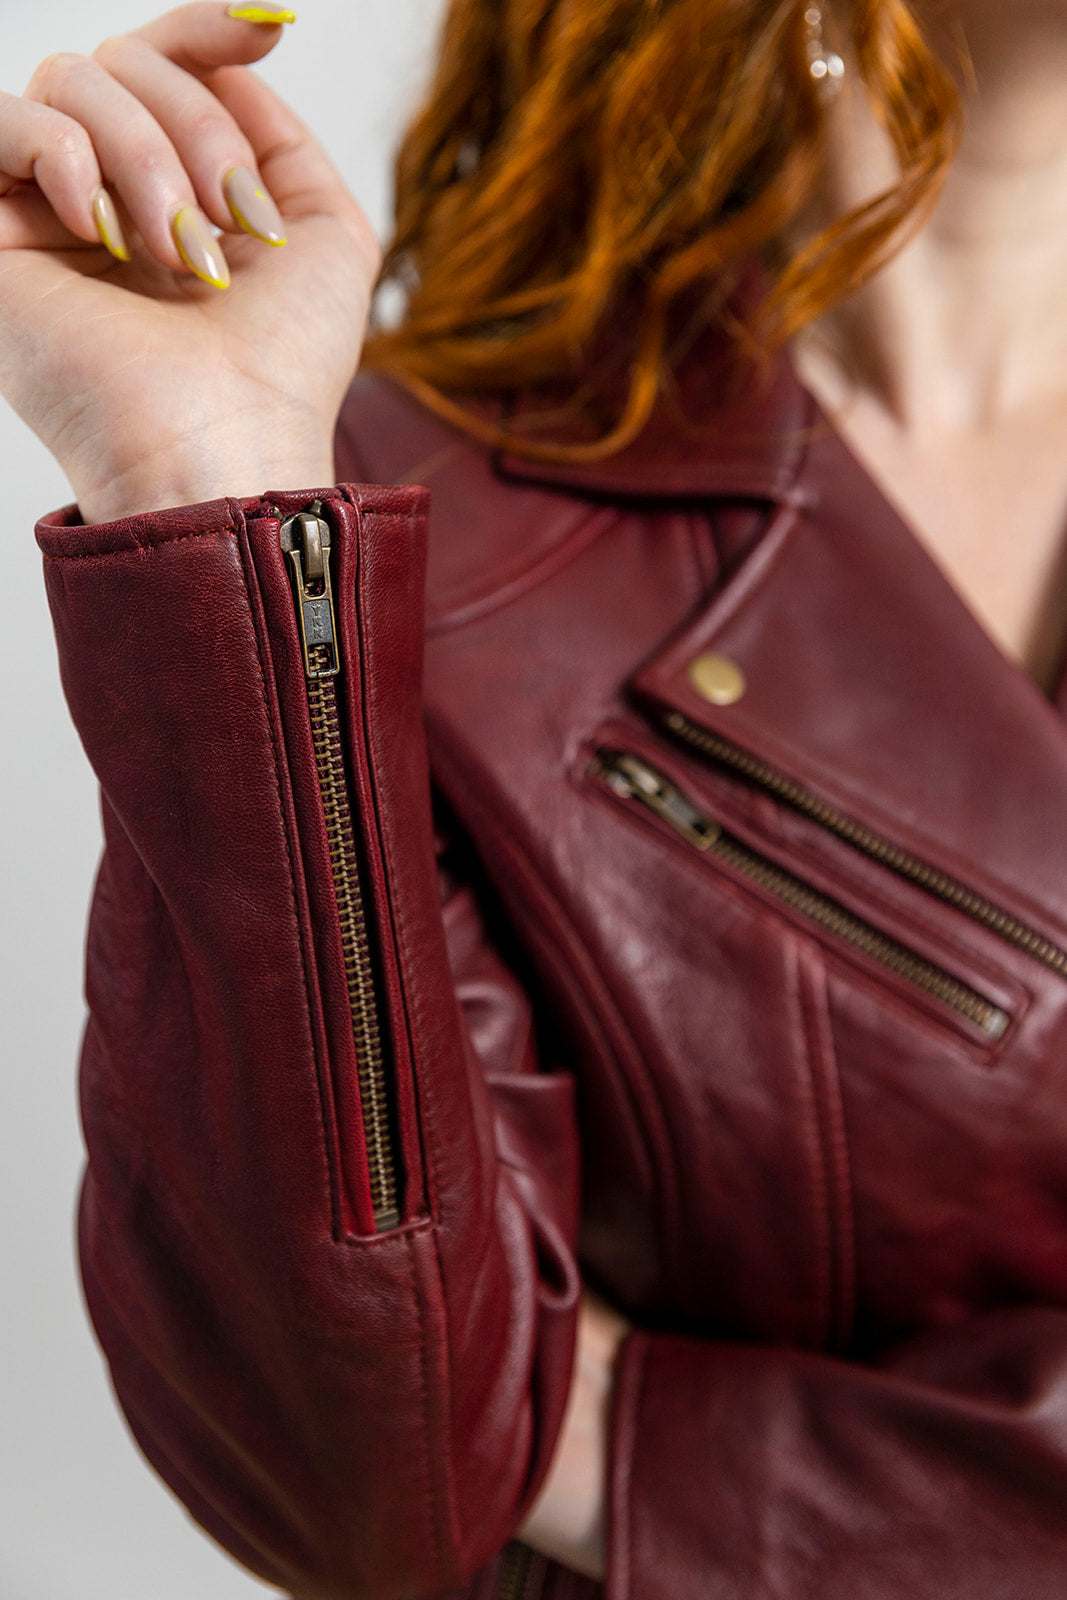 Betsy Womens Fashion Leather Jacket